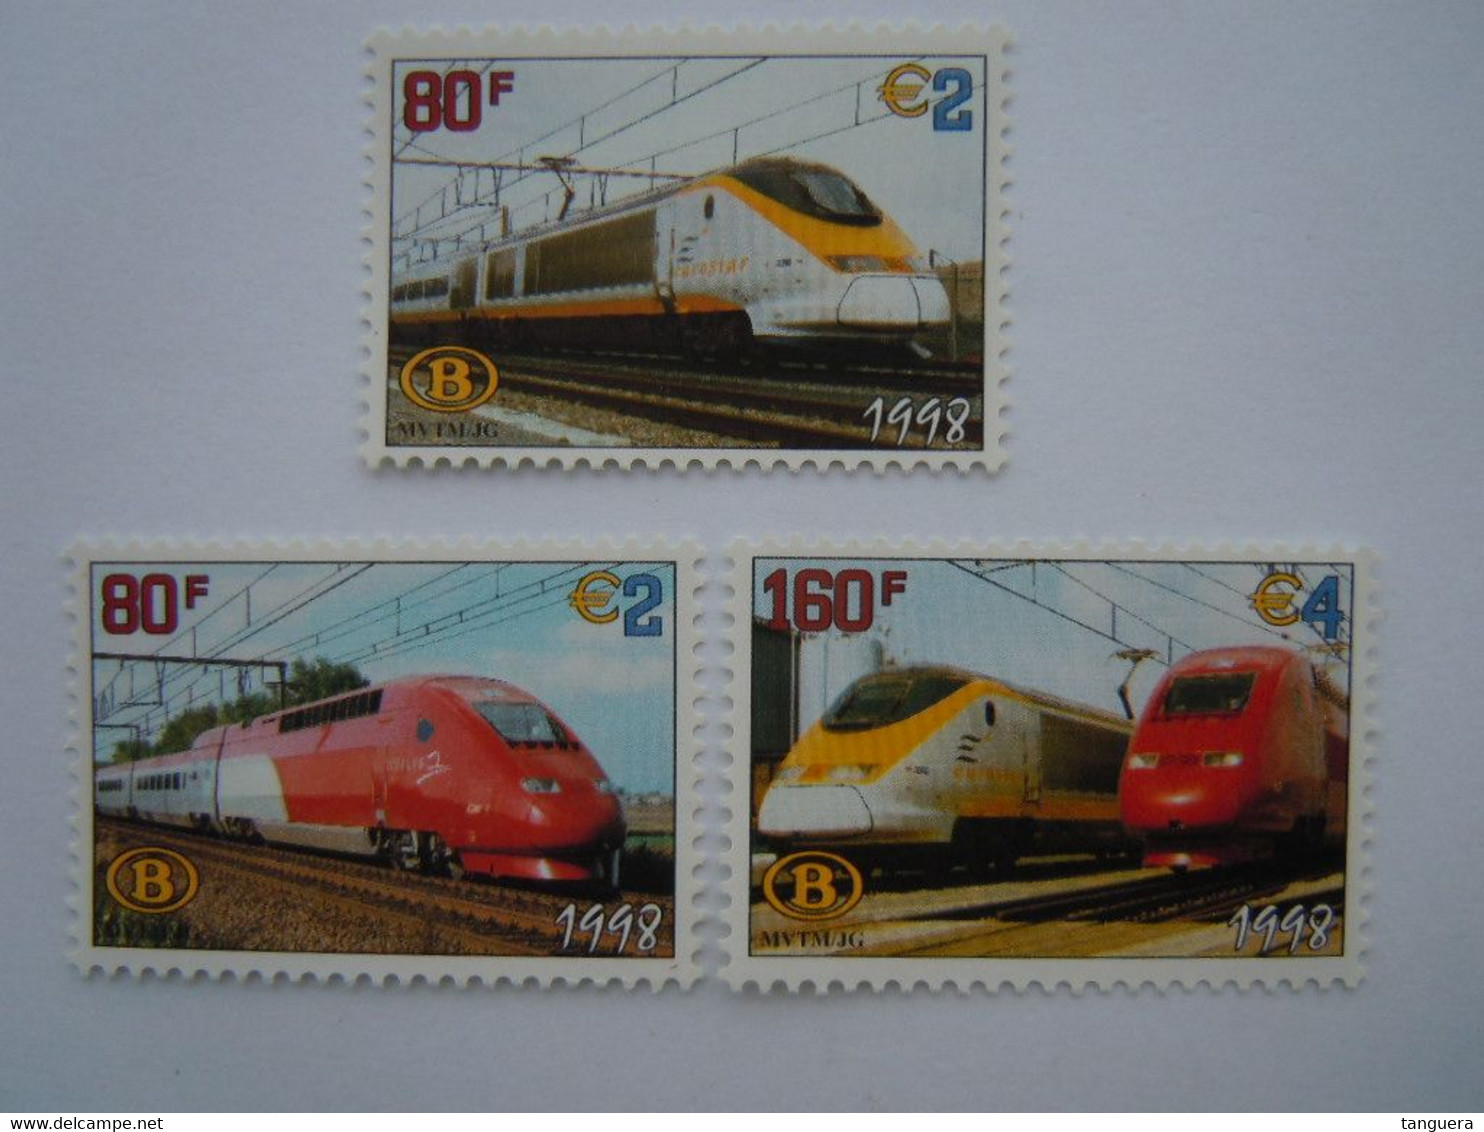 België Belgique 1998 Spoorwegvignet Vignette Chemins De Fer Eurostar Thalys Trein Train TRV6/8 MNH ** - 1996-2013 Vignettes [TRV]